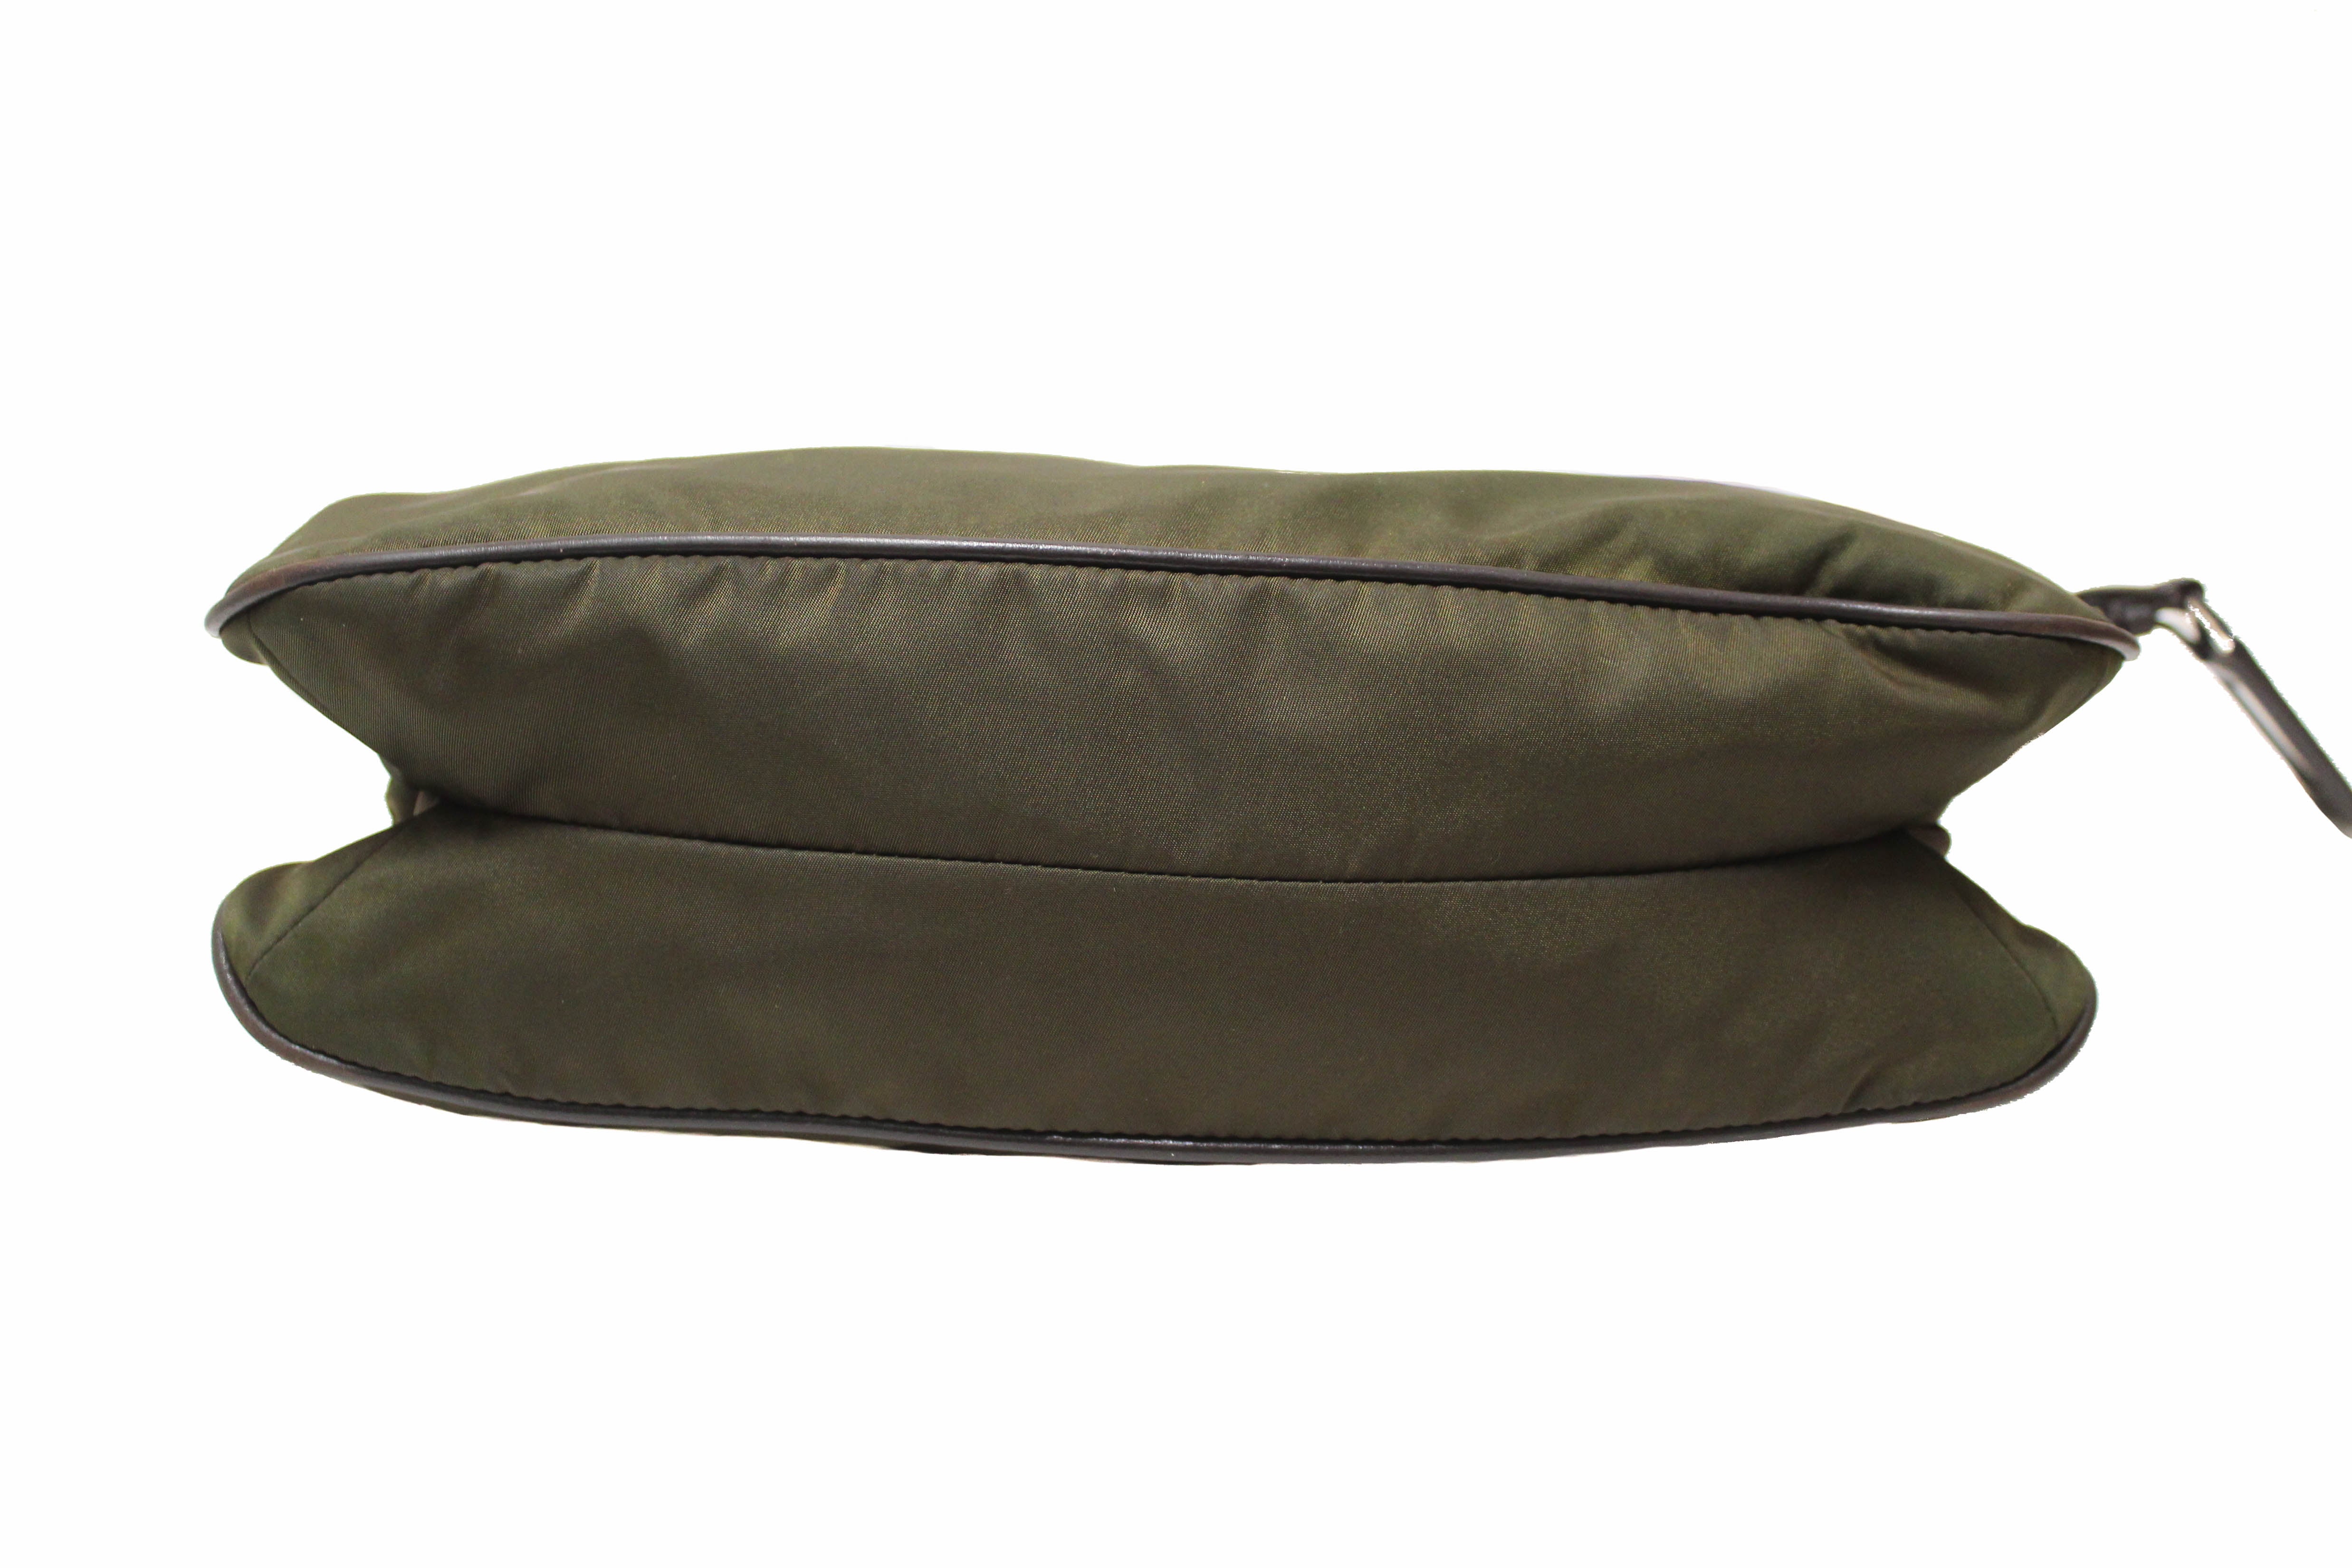 Authentic Prada Green Tessuto Soft Calf Leather and Nylon Shoulder Bag